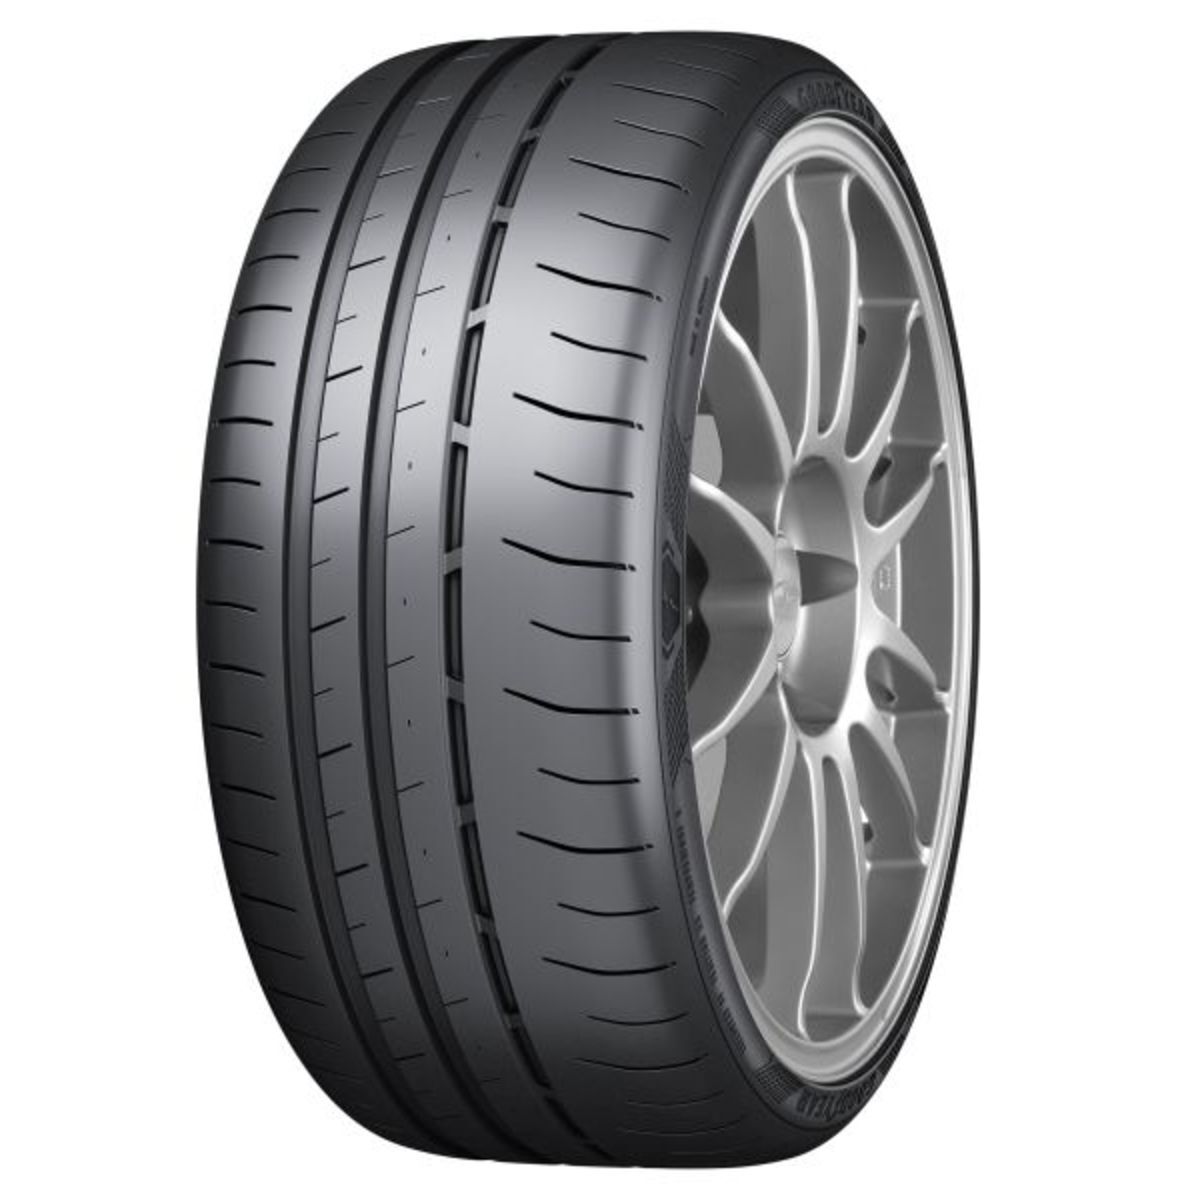 Neumáticos de verano GOODYEAR Eagle F1 SuperSport R 265/35R20 XL 99Y